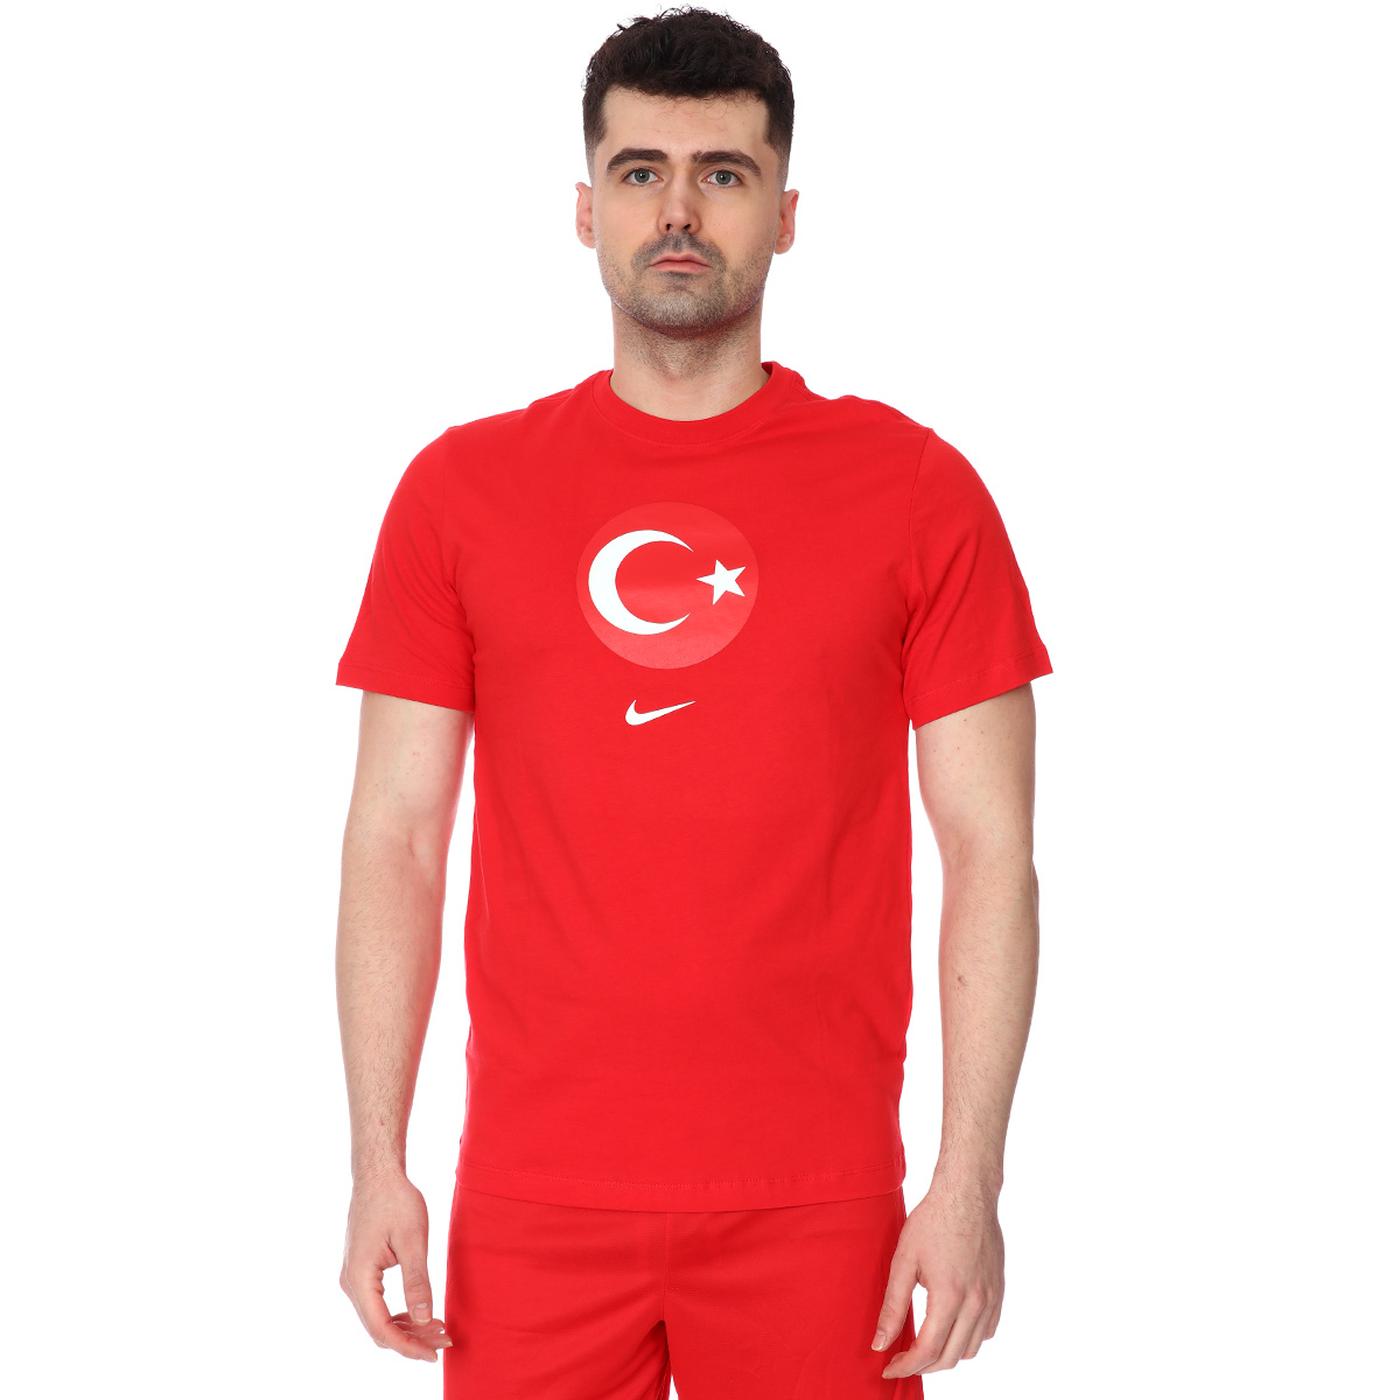 Nike Turkey футболка. Nike Turkey. Sport formalari. Найк турция сайт